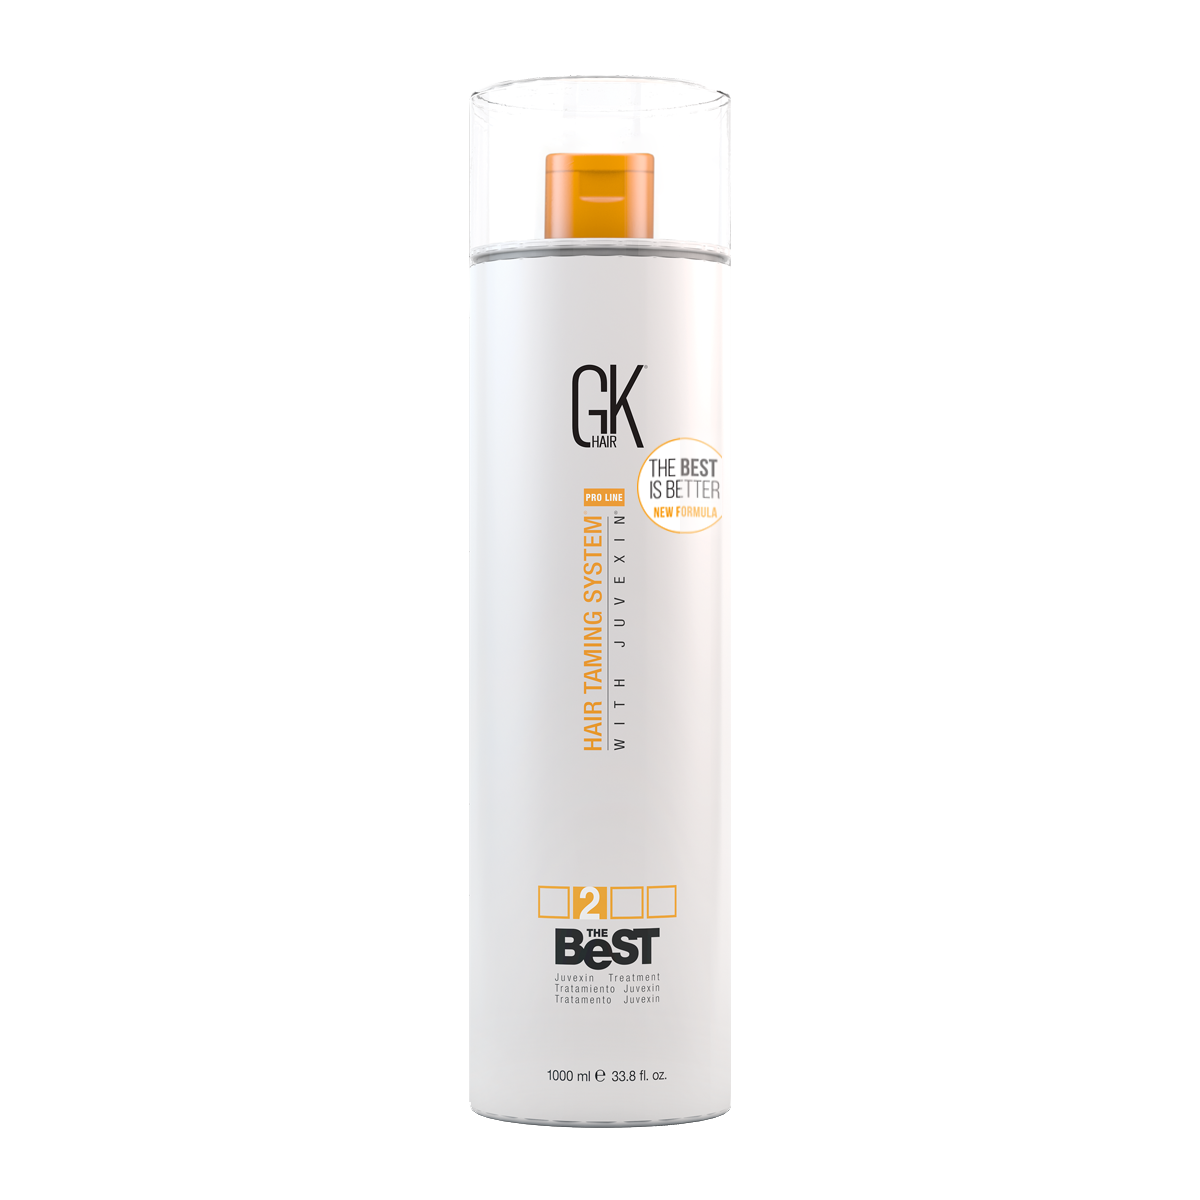 GK Hair Best Keratin Treatment at Home | The Best Hair Treatment